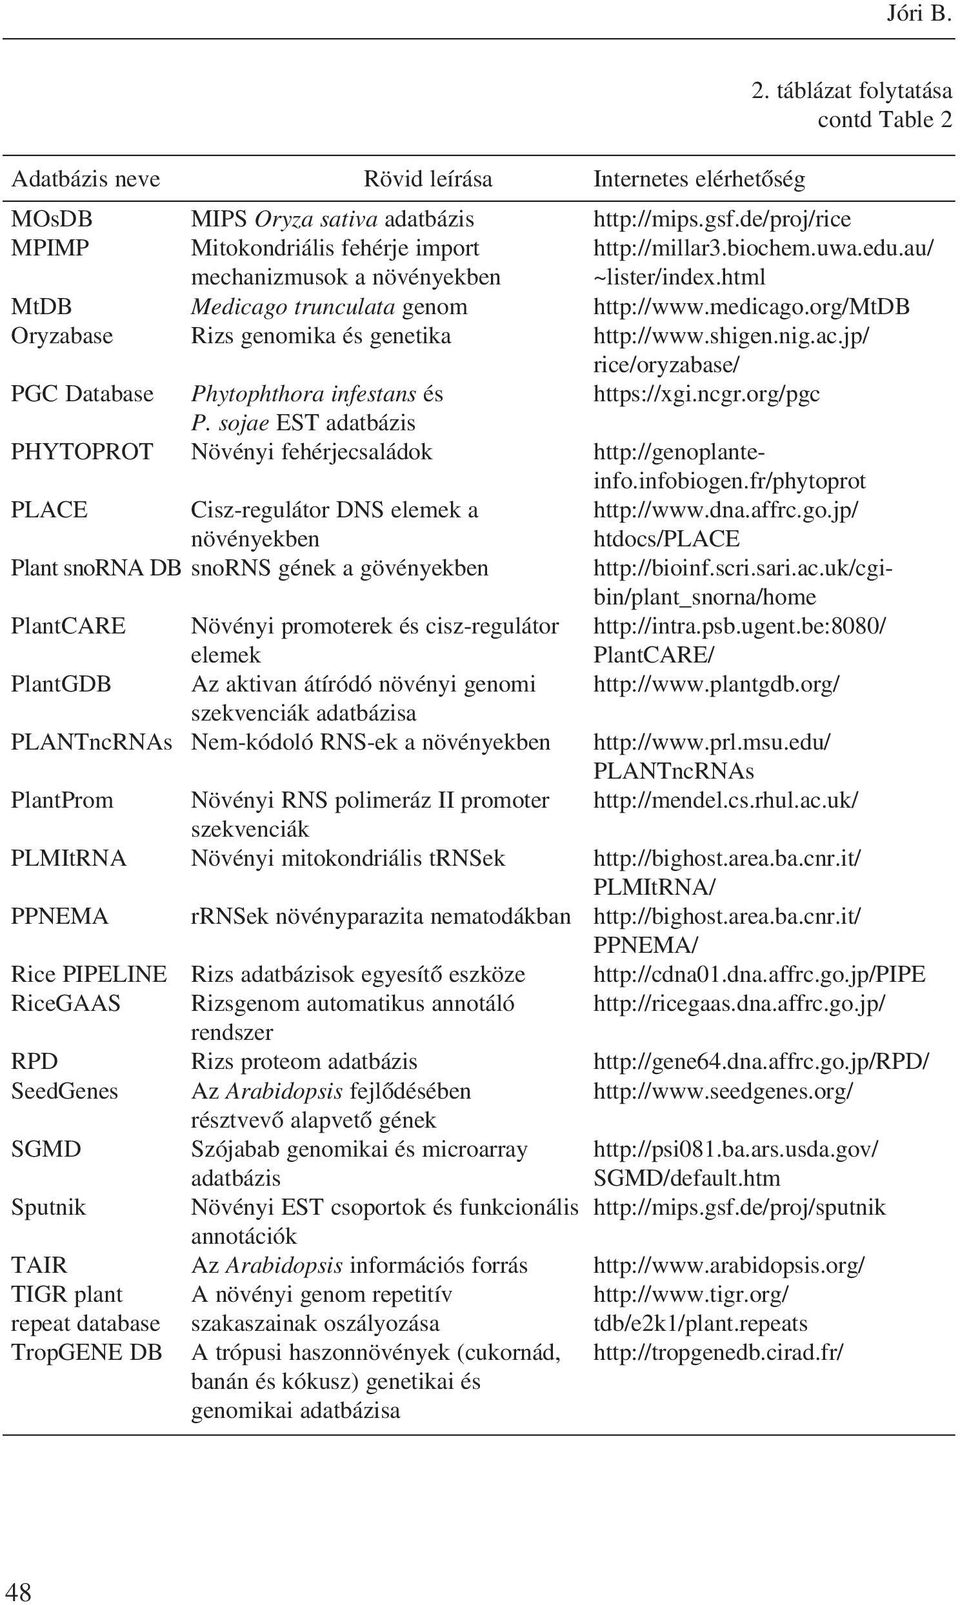 org/mtdb Oryzabase Rizs genomika és genetika http://www.shigen.nig.ac.jp/ rice/oryzabase/ PGC Database Phytophthora infestans és https://xgi.ncgr.org/pgc P.